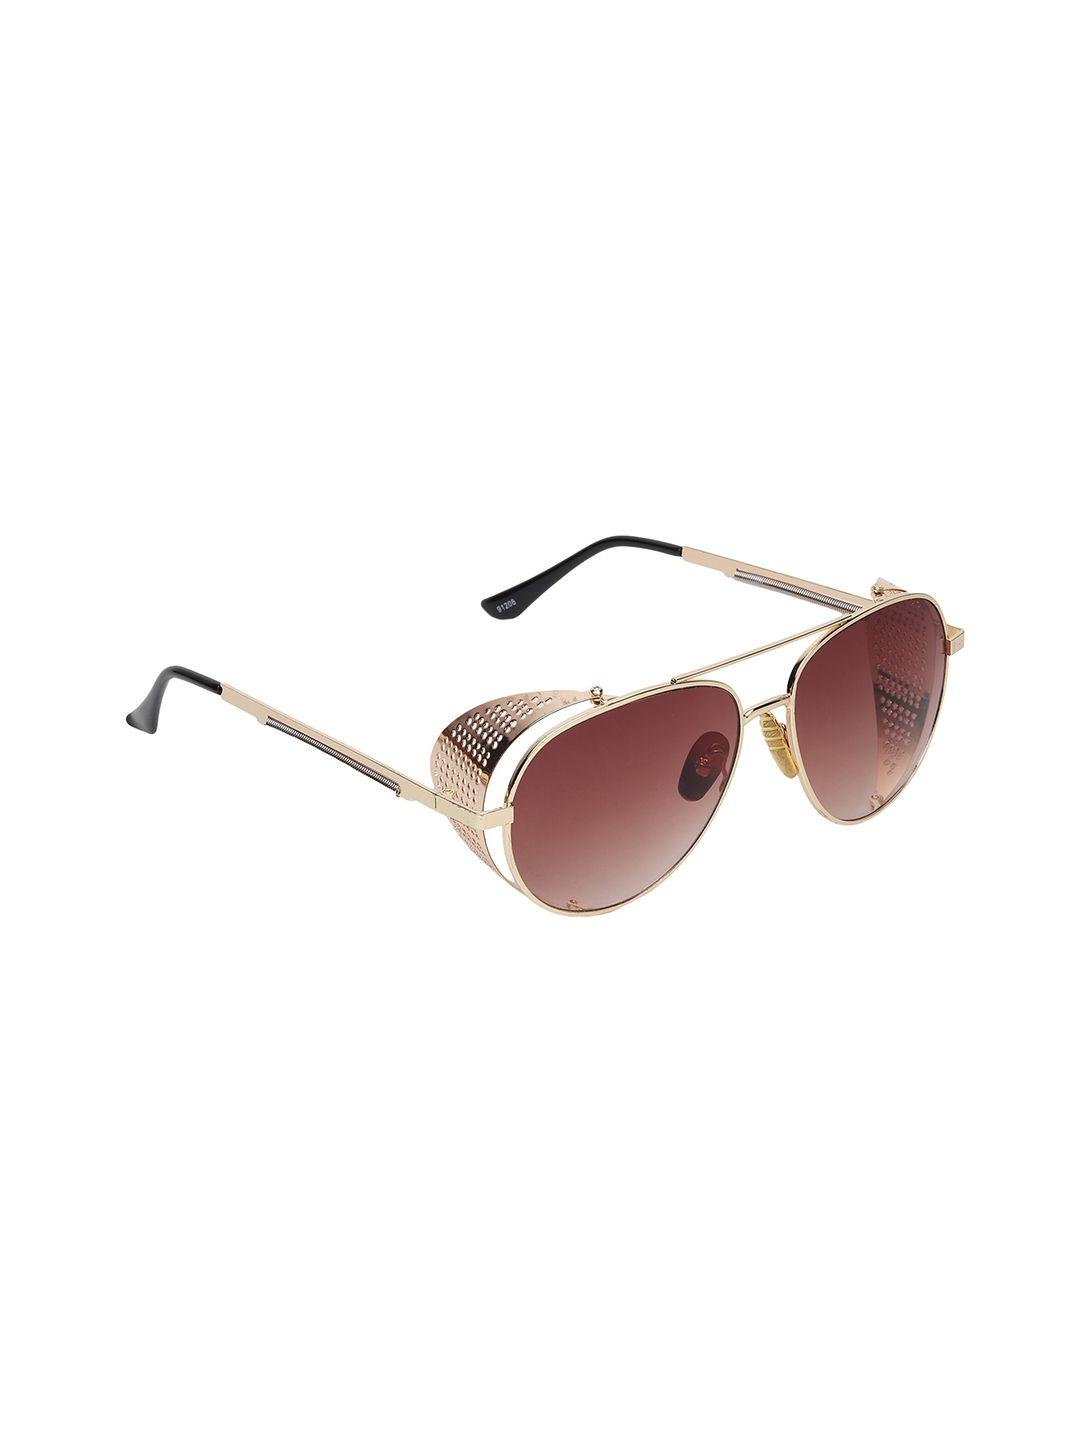 swiss design aviator sunglasses with uv protected lens sdsg-91208-04